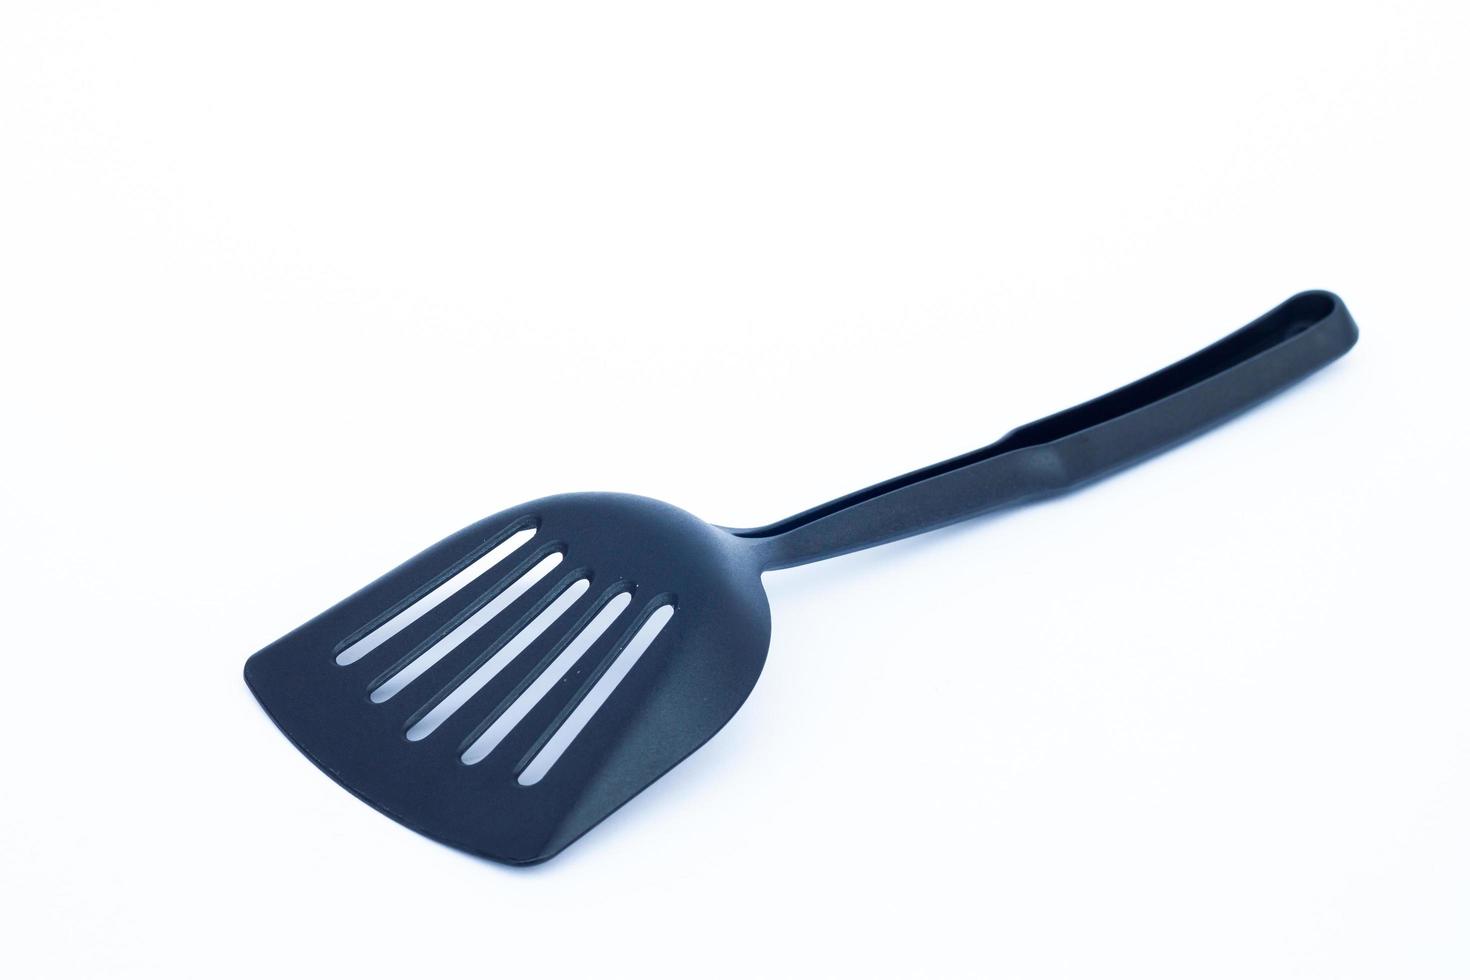 Black spatula on a white background photo